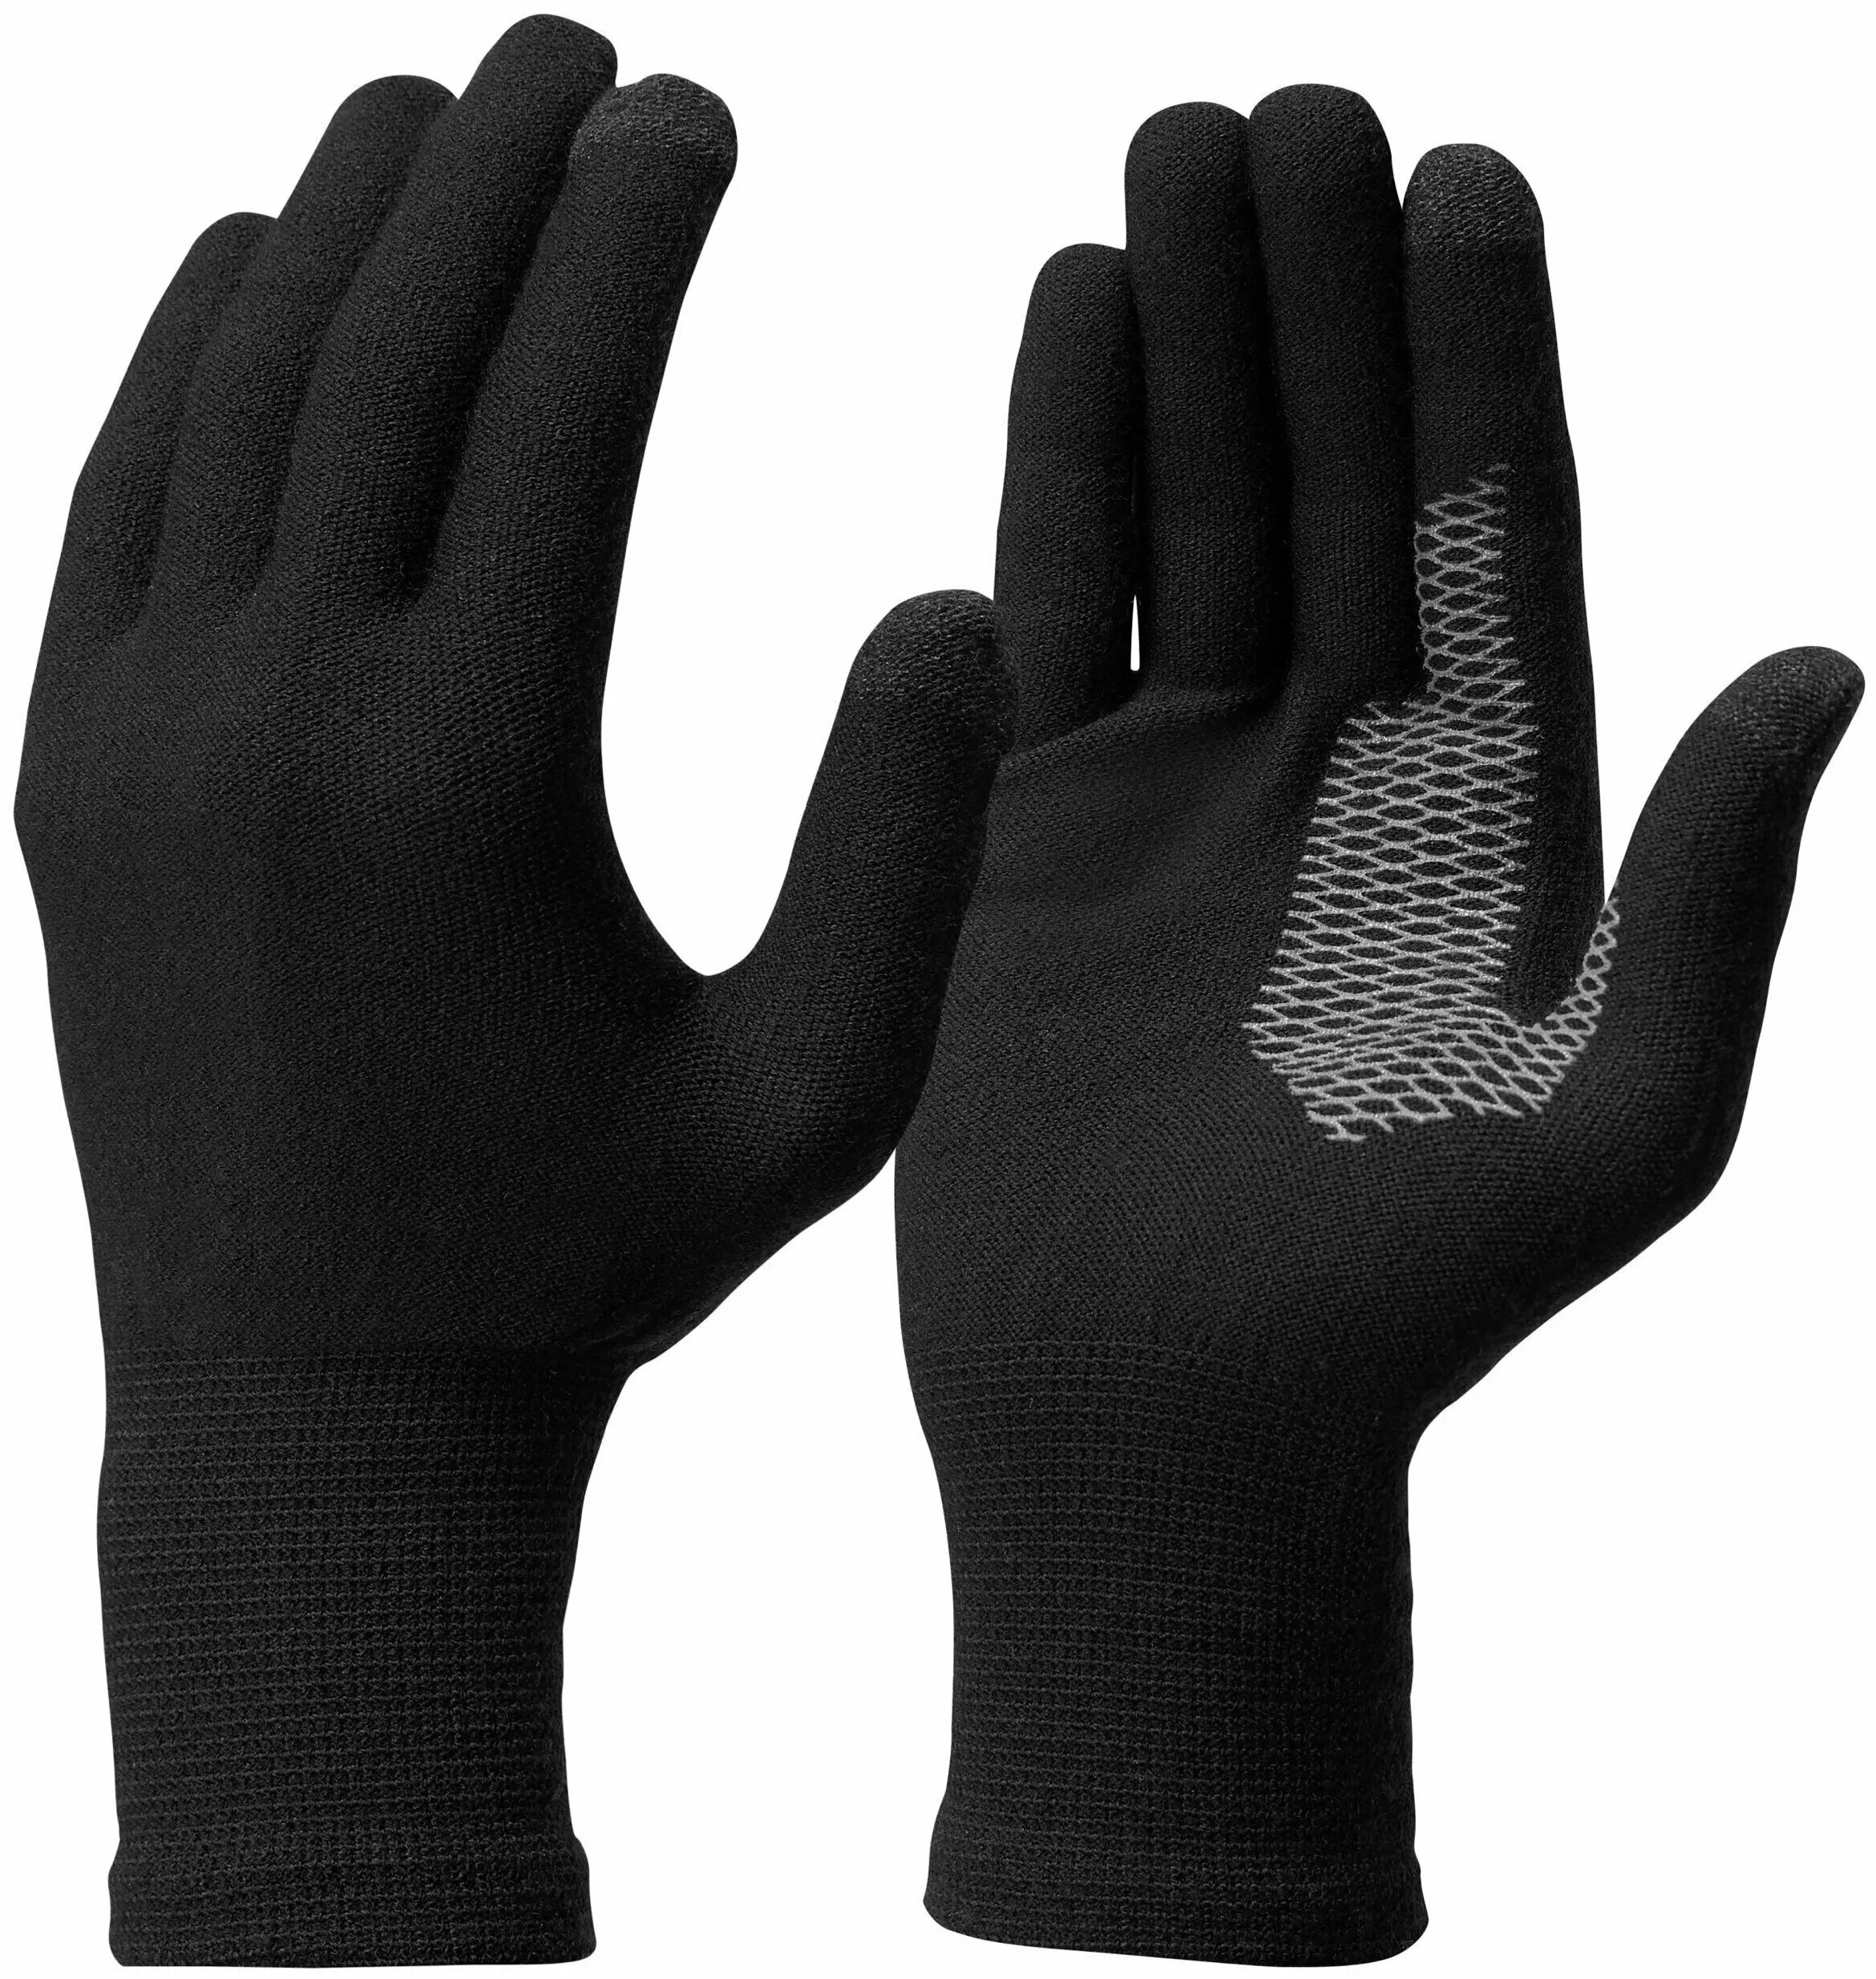 Перчатки Forclaz Trek 500. Forclaz перчатки s. Перчатки мужские для Glove Trek. Перчатки Forclaz Trek 500 купить.